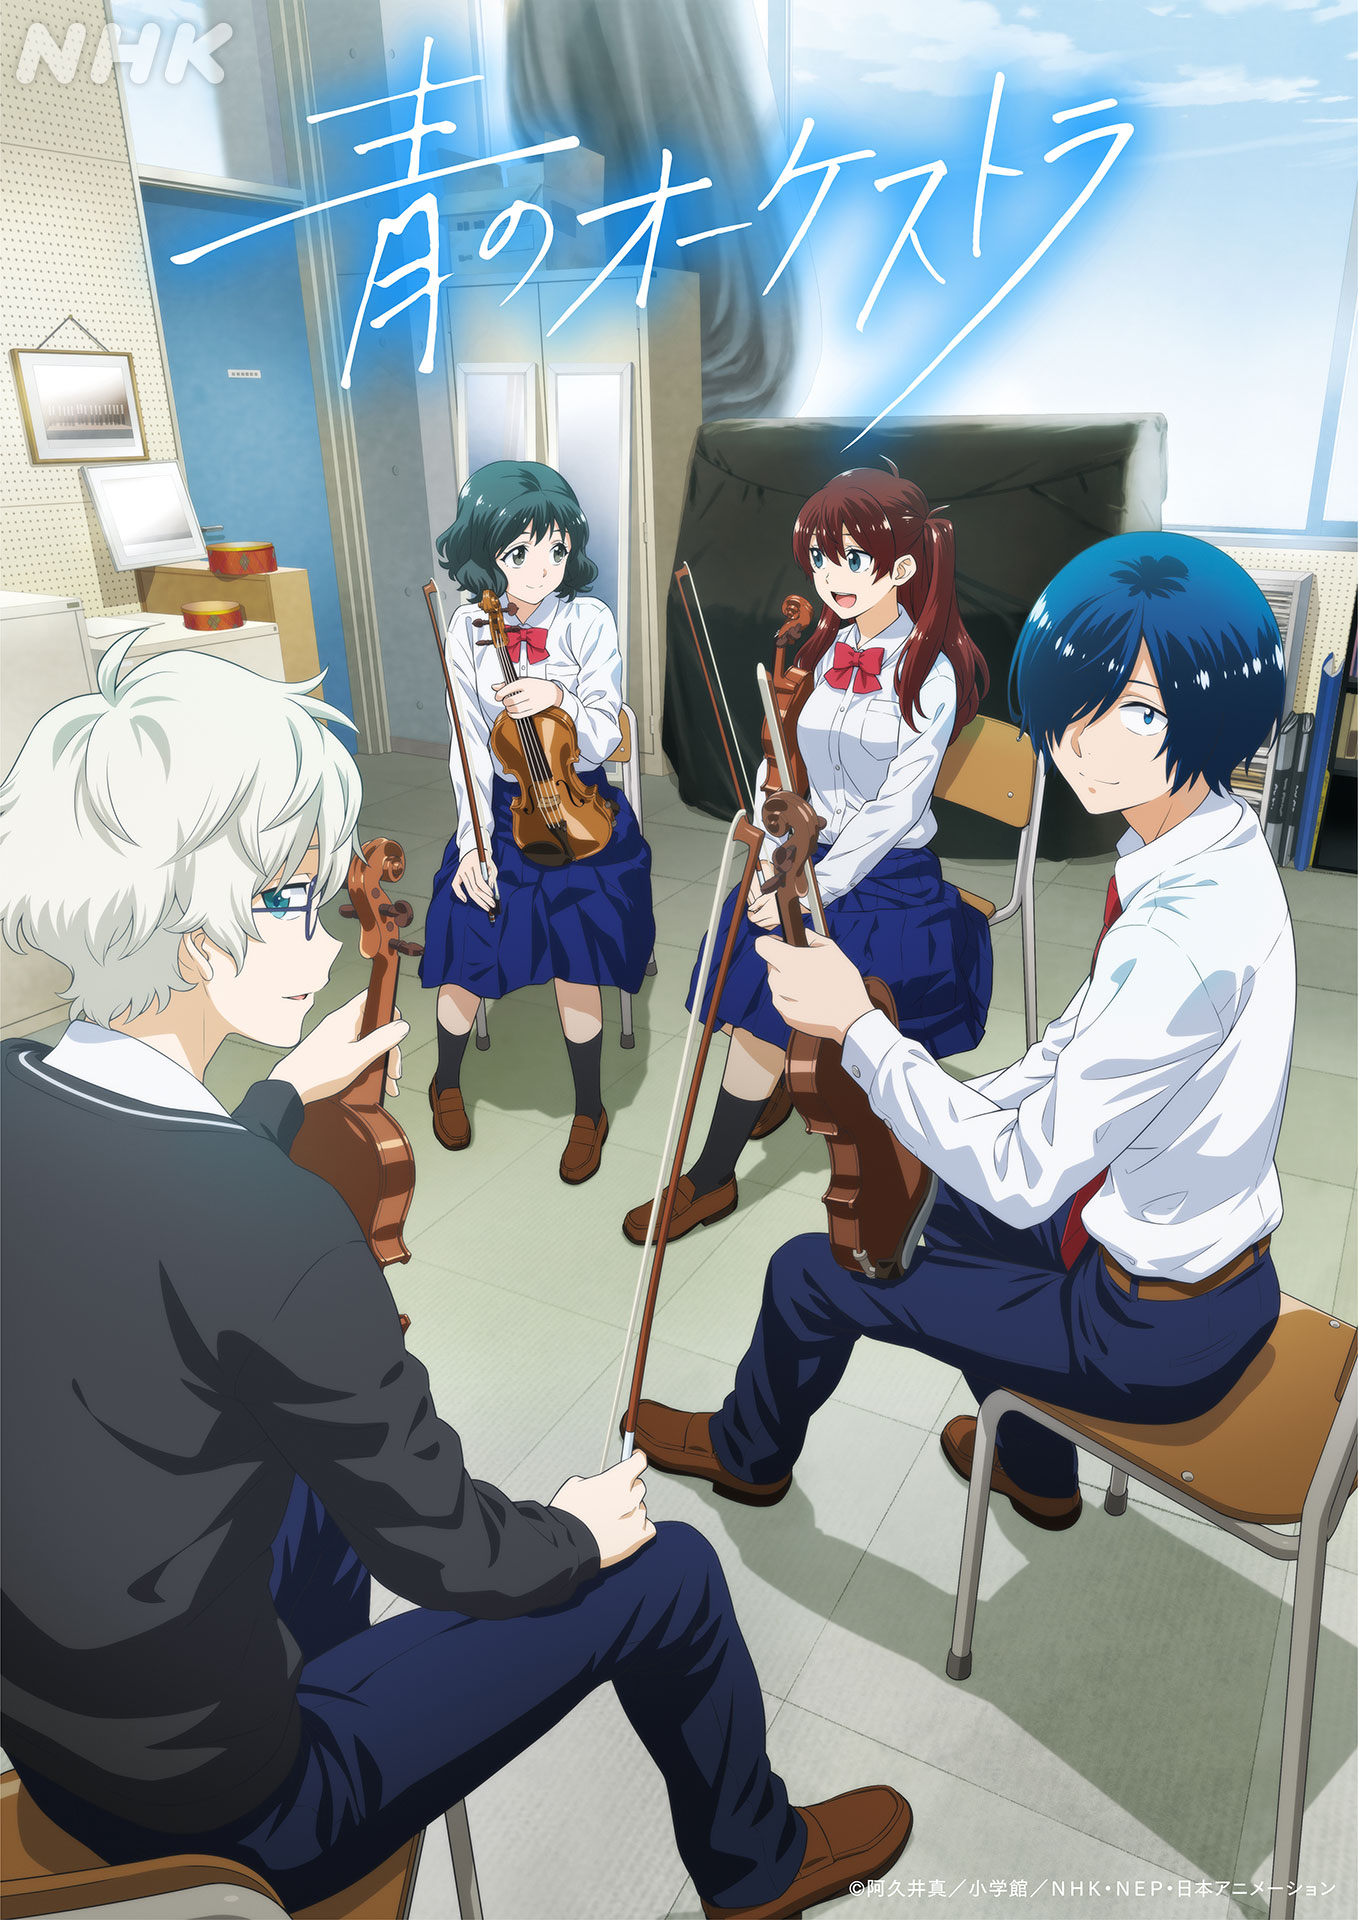 Blue Orchestra anime key visual